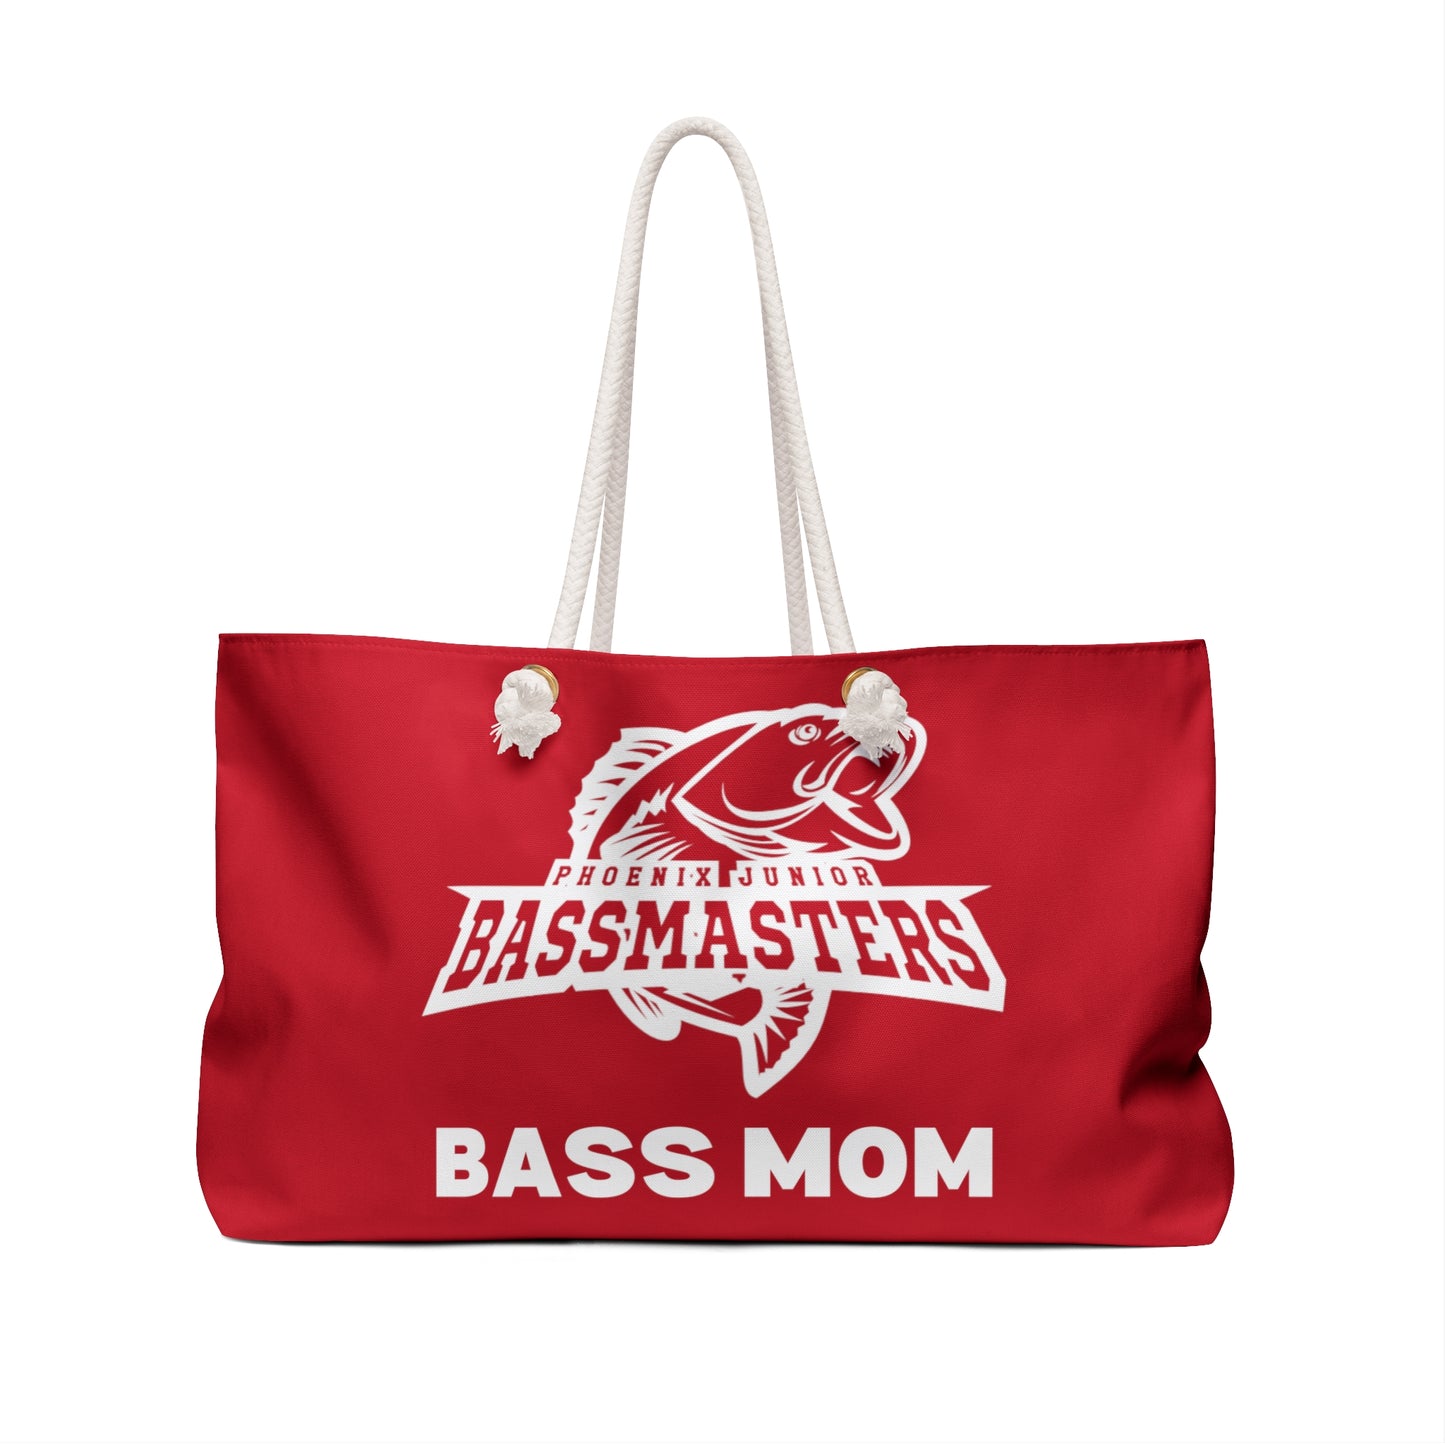 Junior Bassmasters - BASS MOM - Weekender Bag (Red)